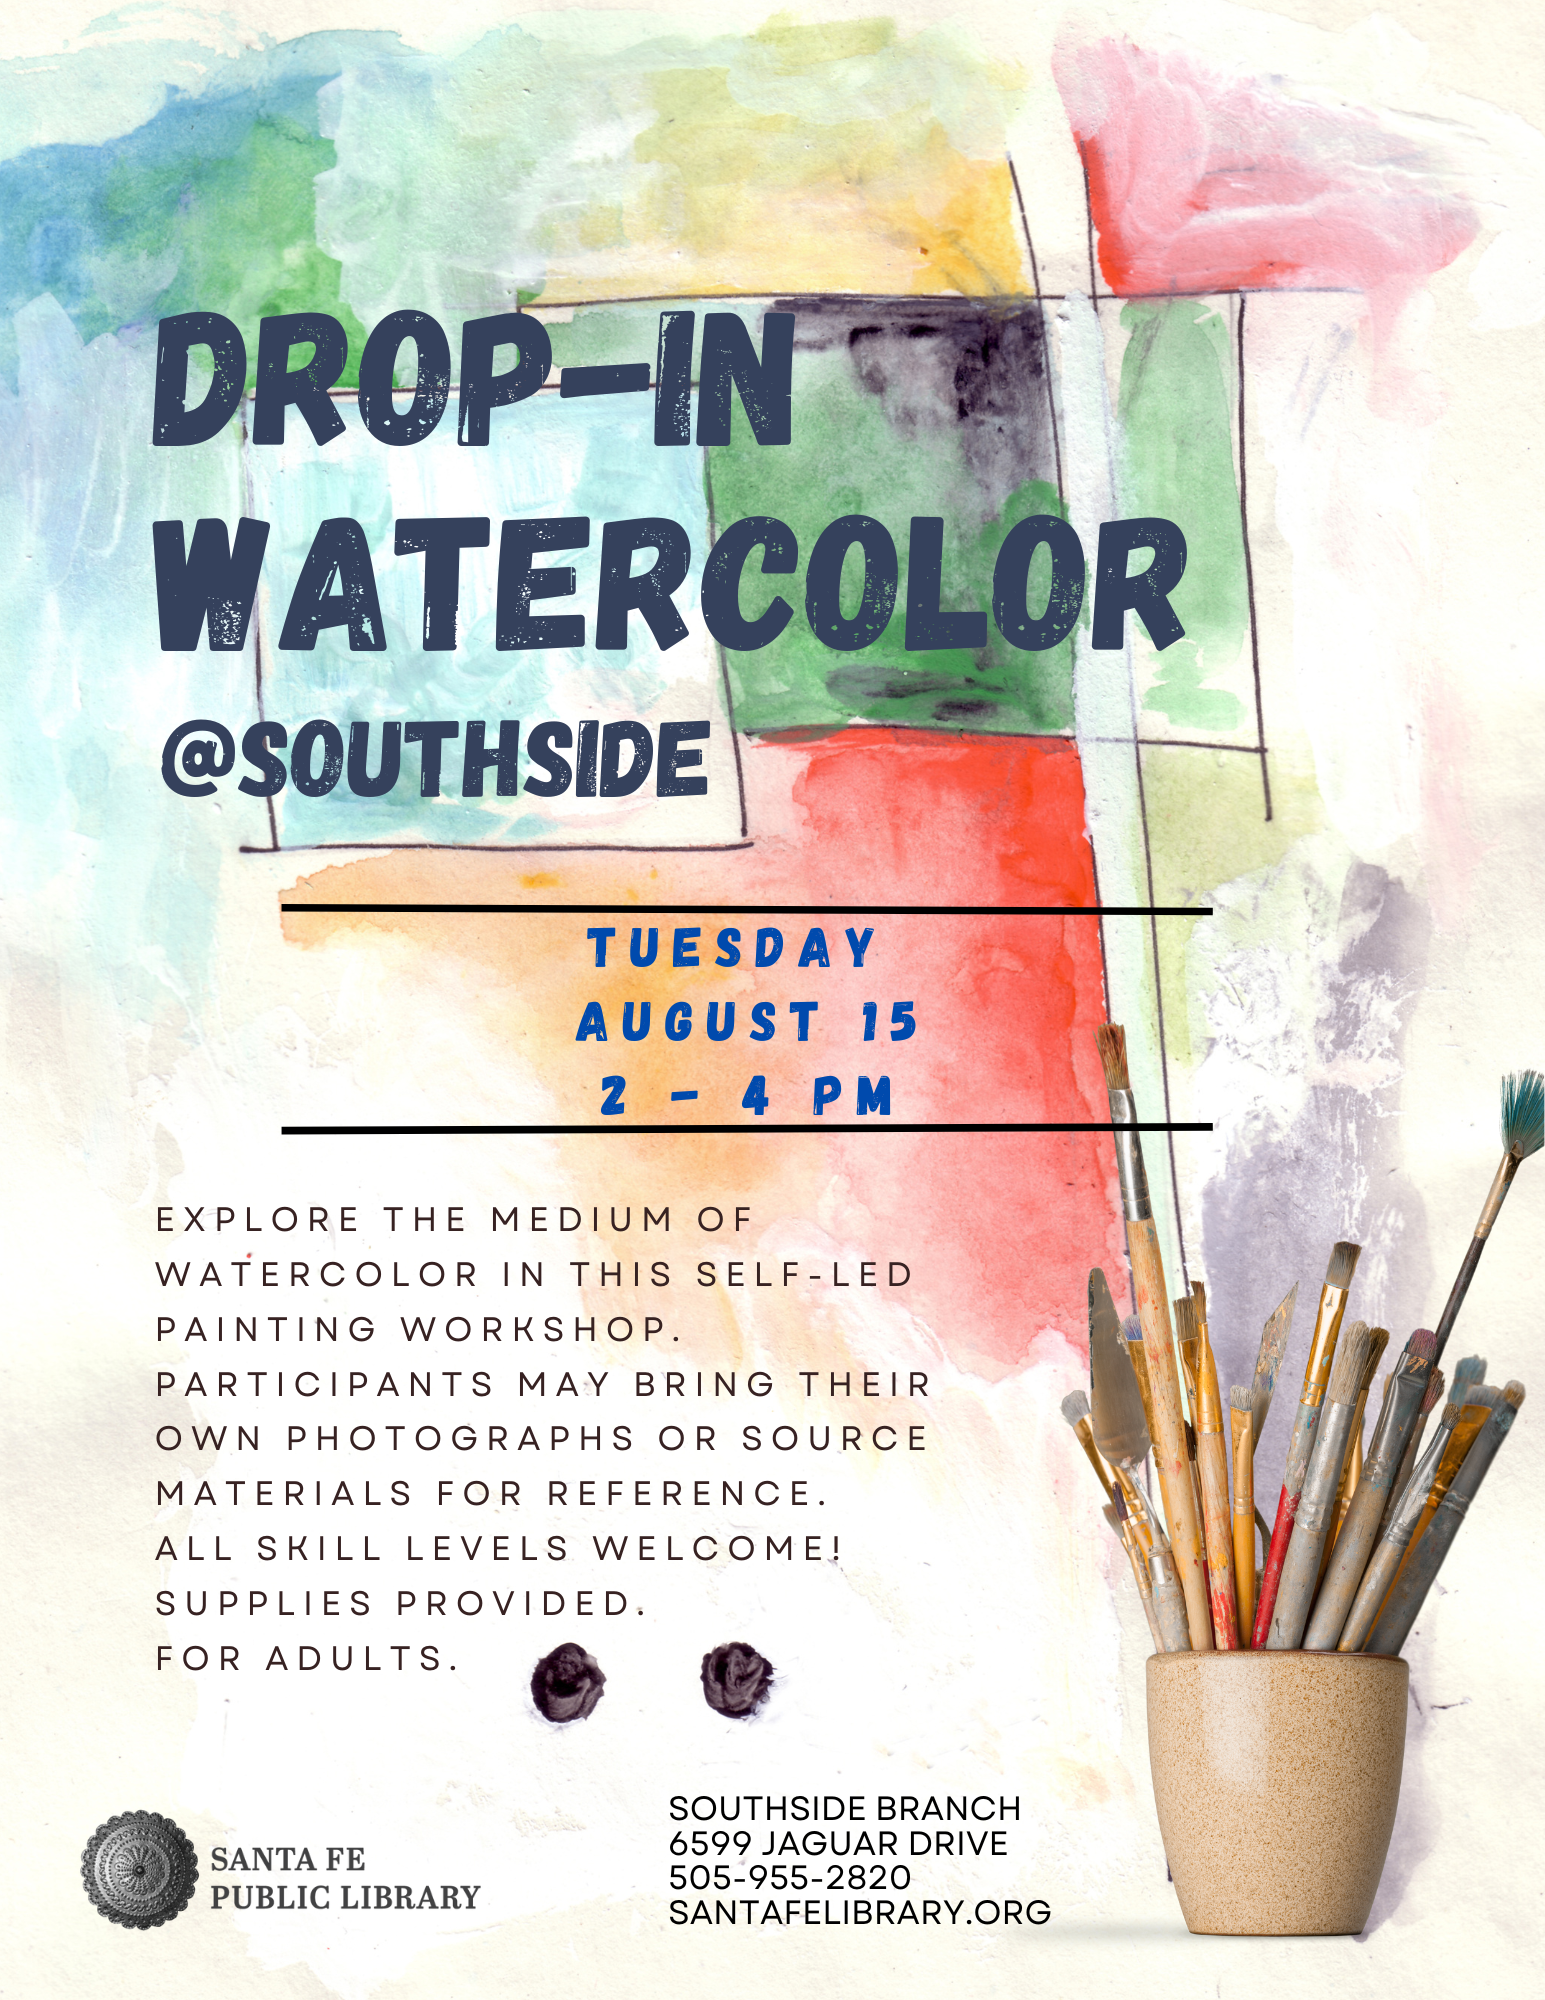 Watercolor workshop flier